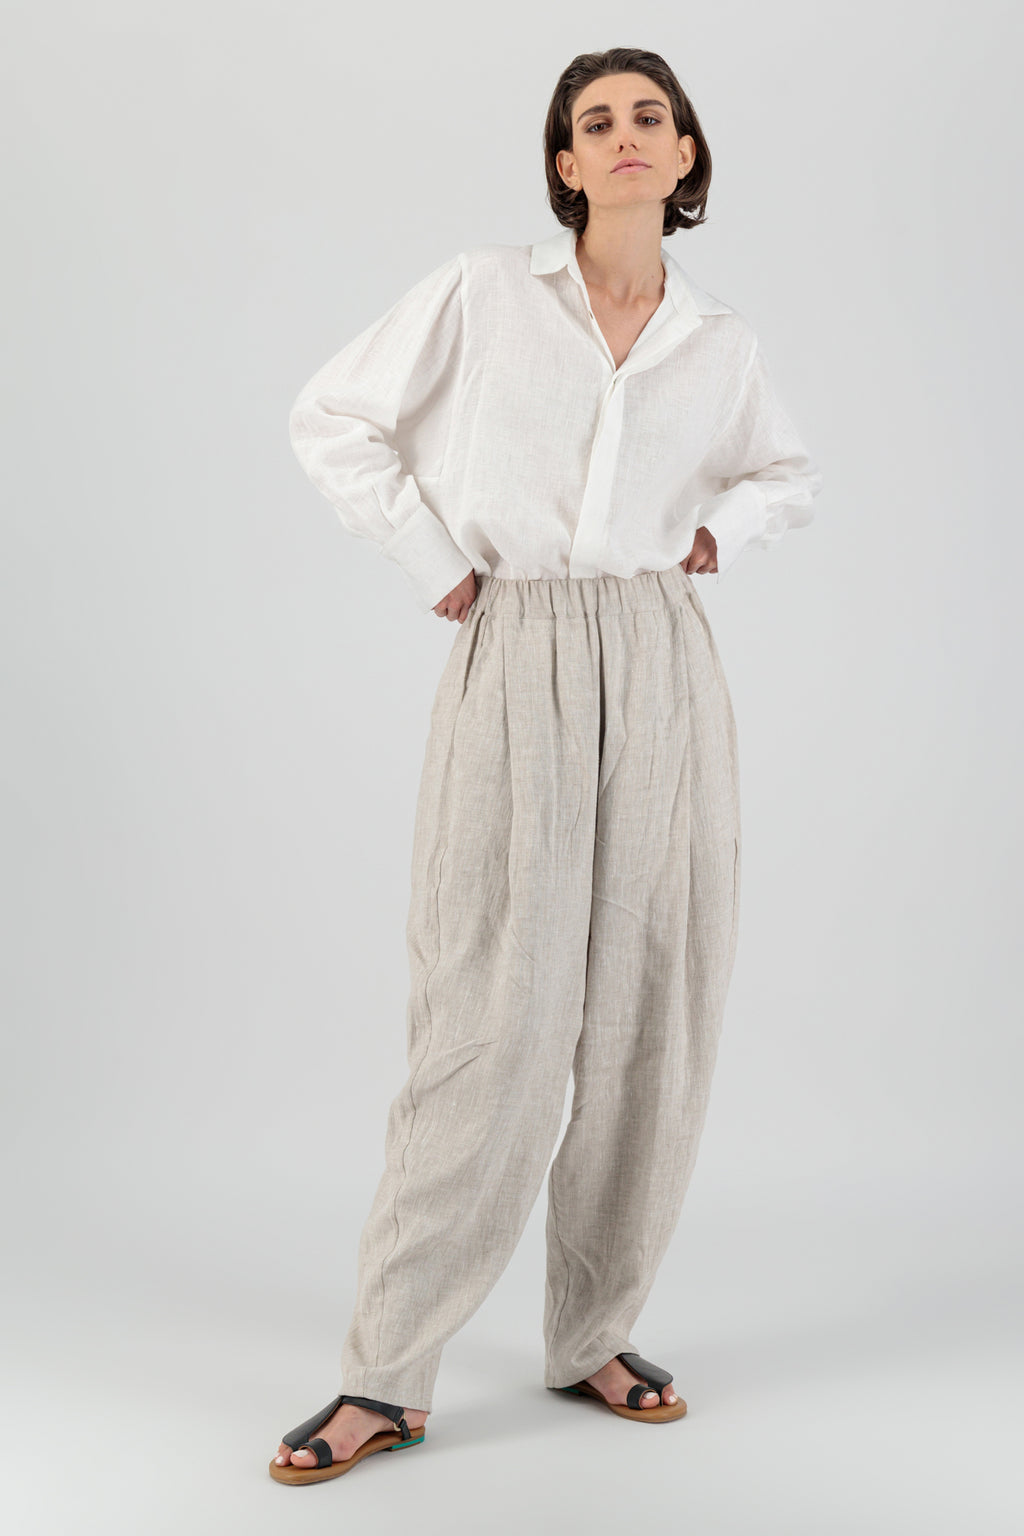 Elementa 01 | Zahara Linen Shirt White | 100% Linen | Made sustainably ...